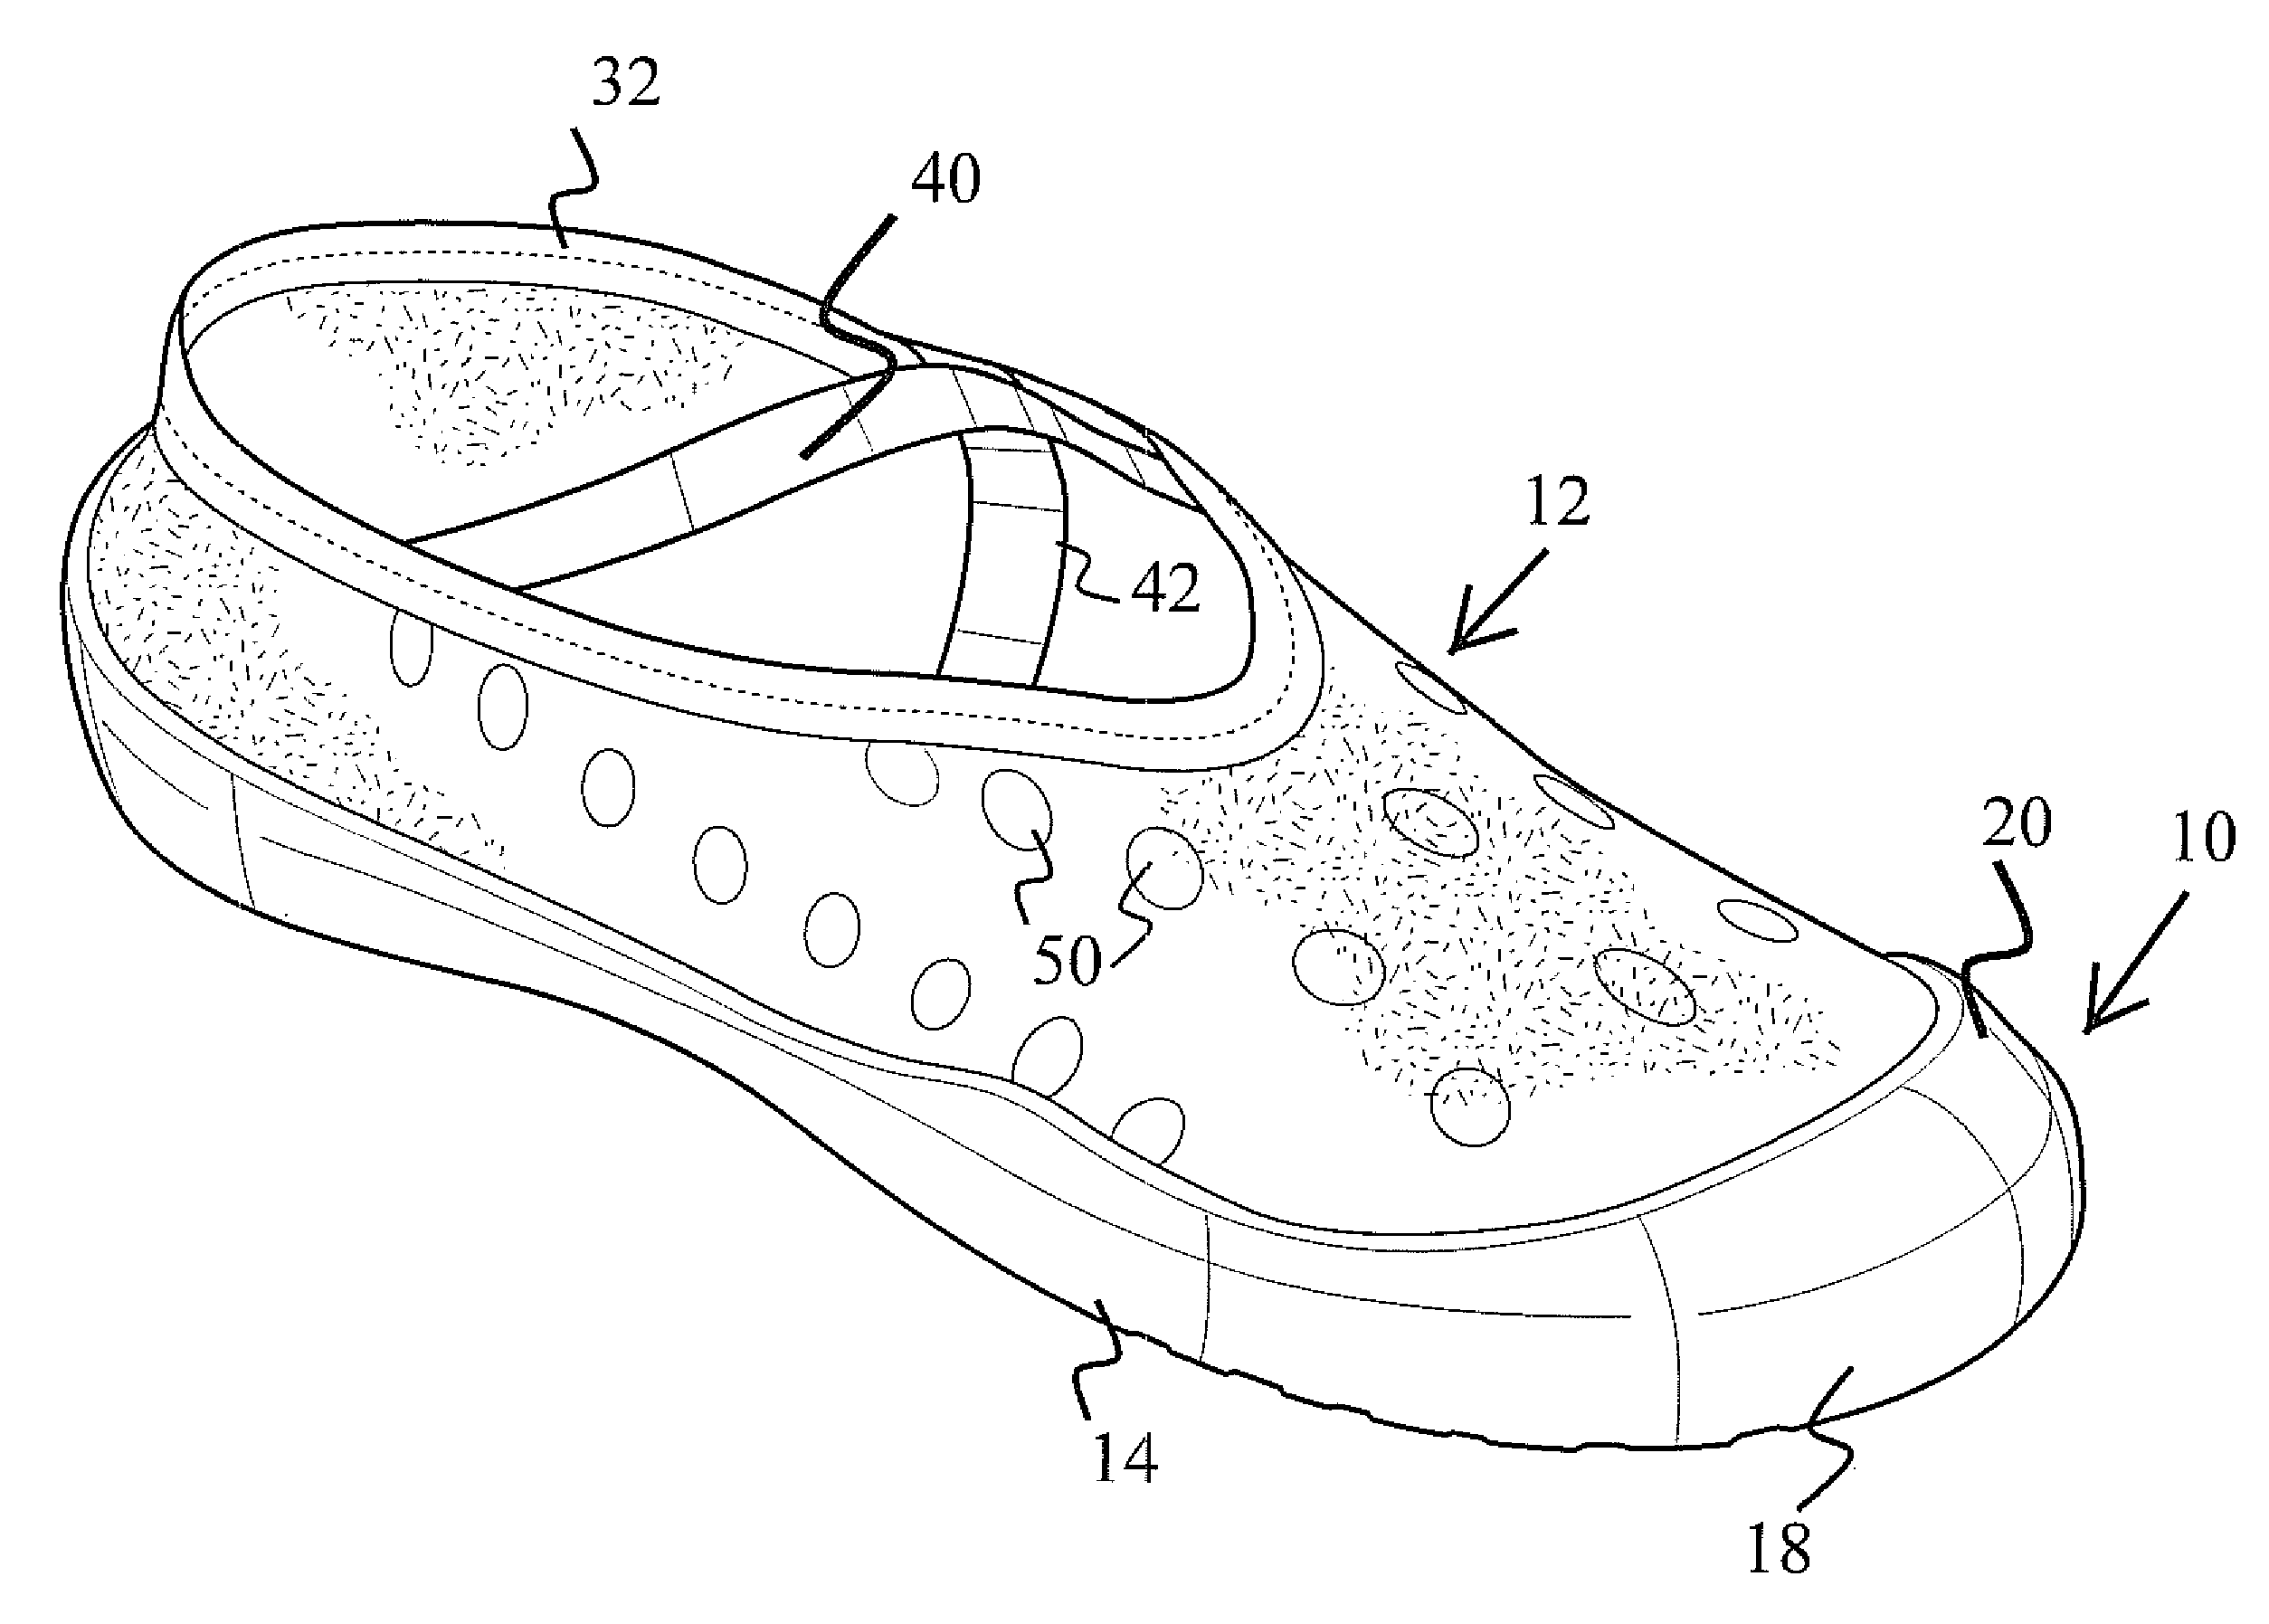 Shoe with elastic upper